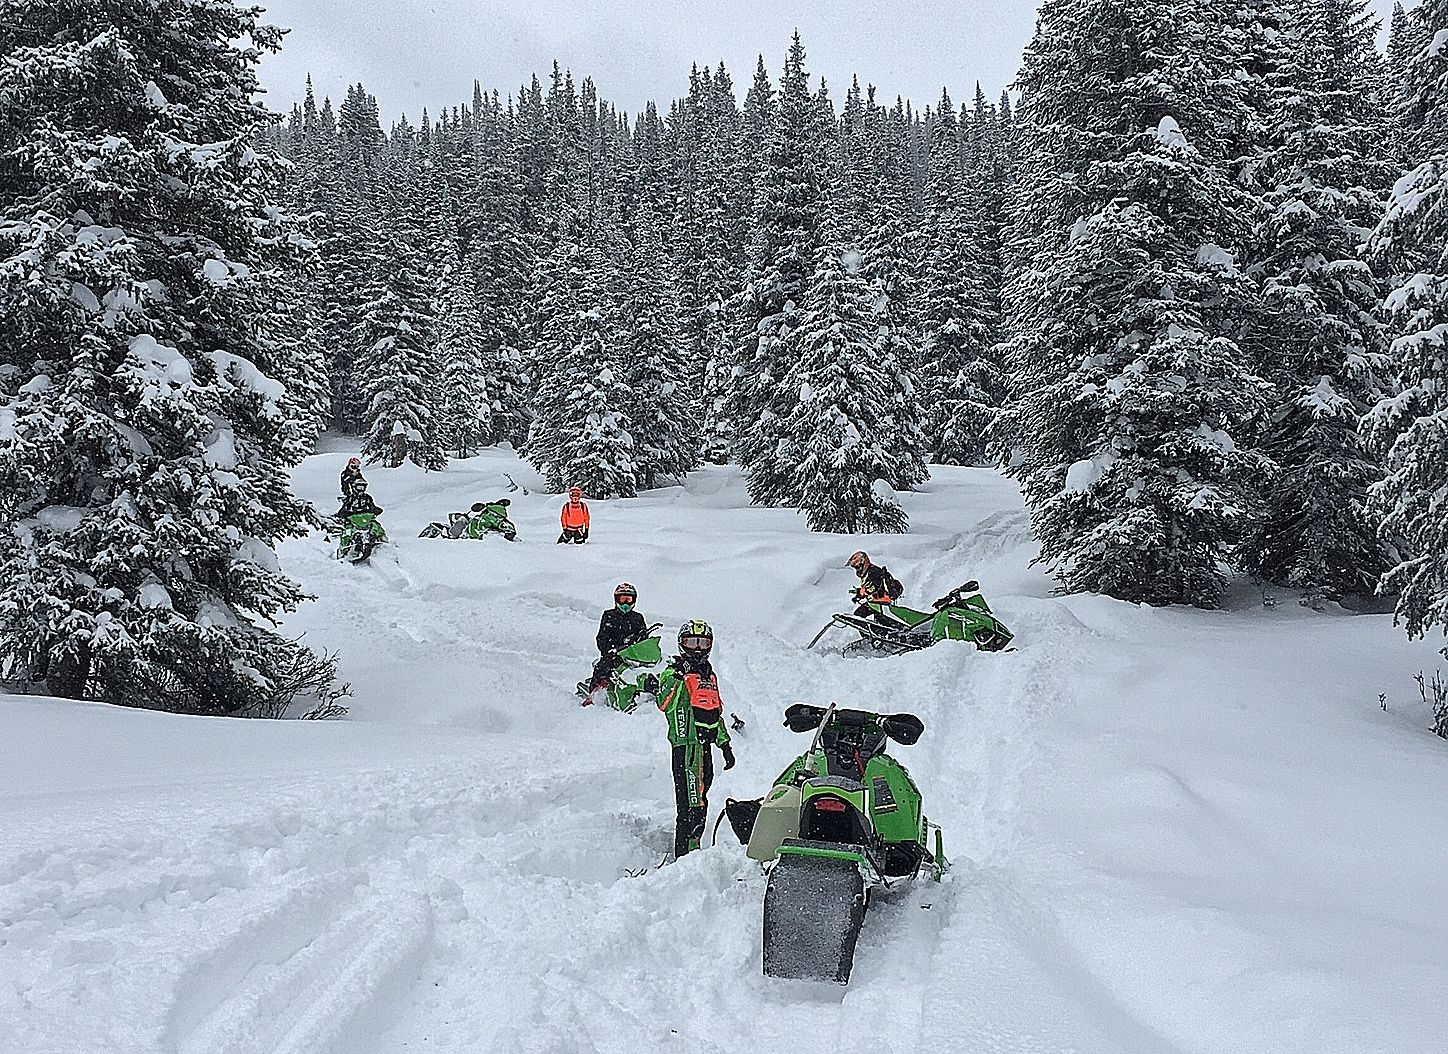 Team Arctic snocross Colorado test trip.